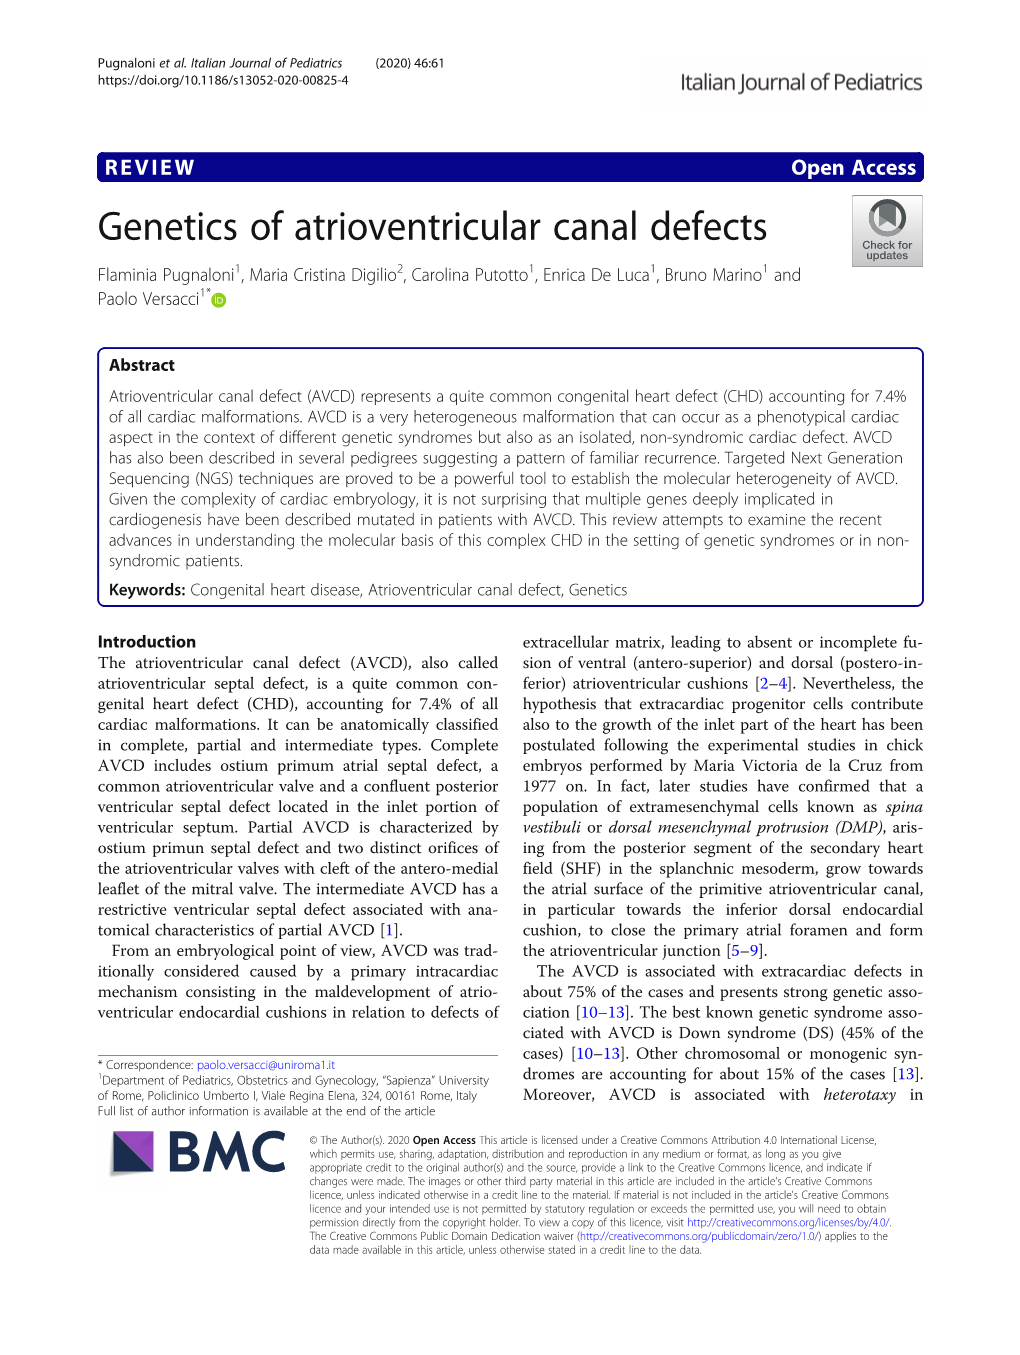 Genetics of Atrioventricular Canal Defects Flaminia Pugnaloni1, Maria Cristina Digilio2, Carolina Putotto1, Enrica De Luca1, Bruno Marino1 and Paolo Versacci1*